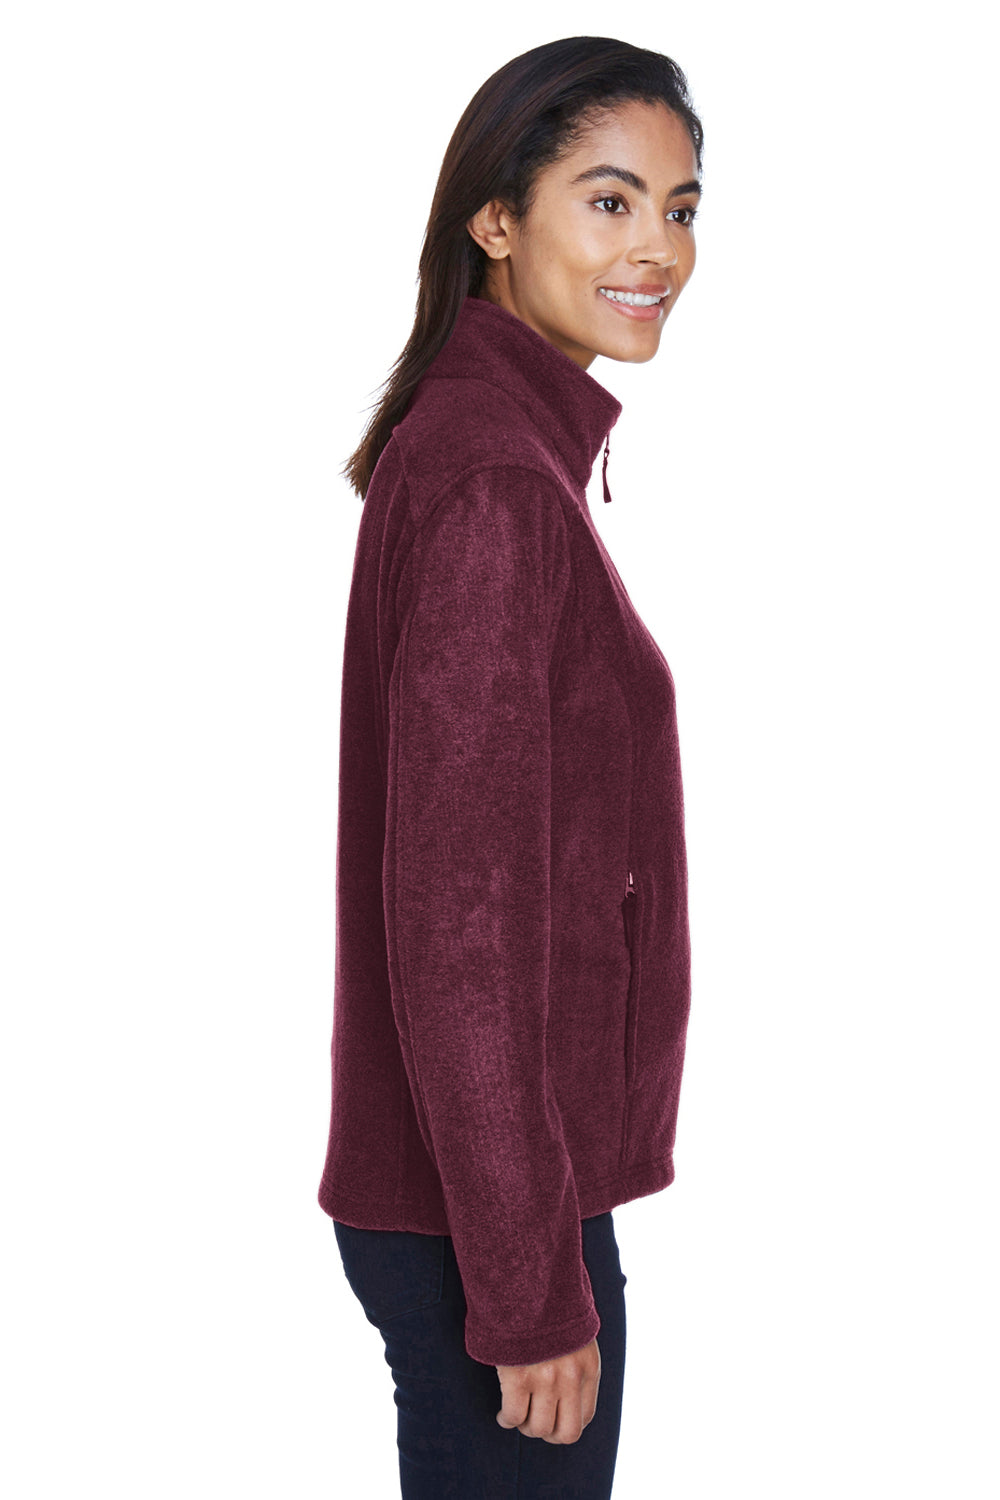 Core 365 78190 Womens Journey Full Zip Fleece Jacket Burgundy Side